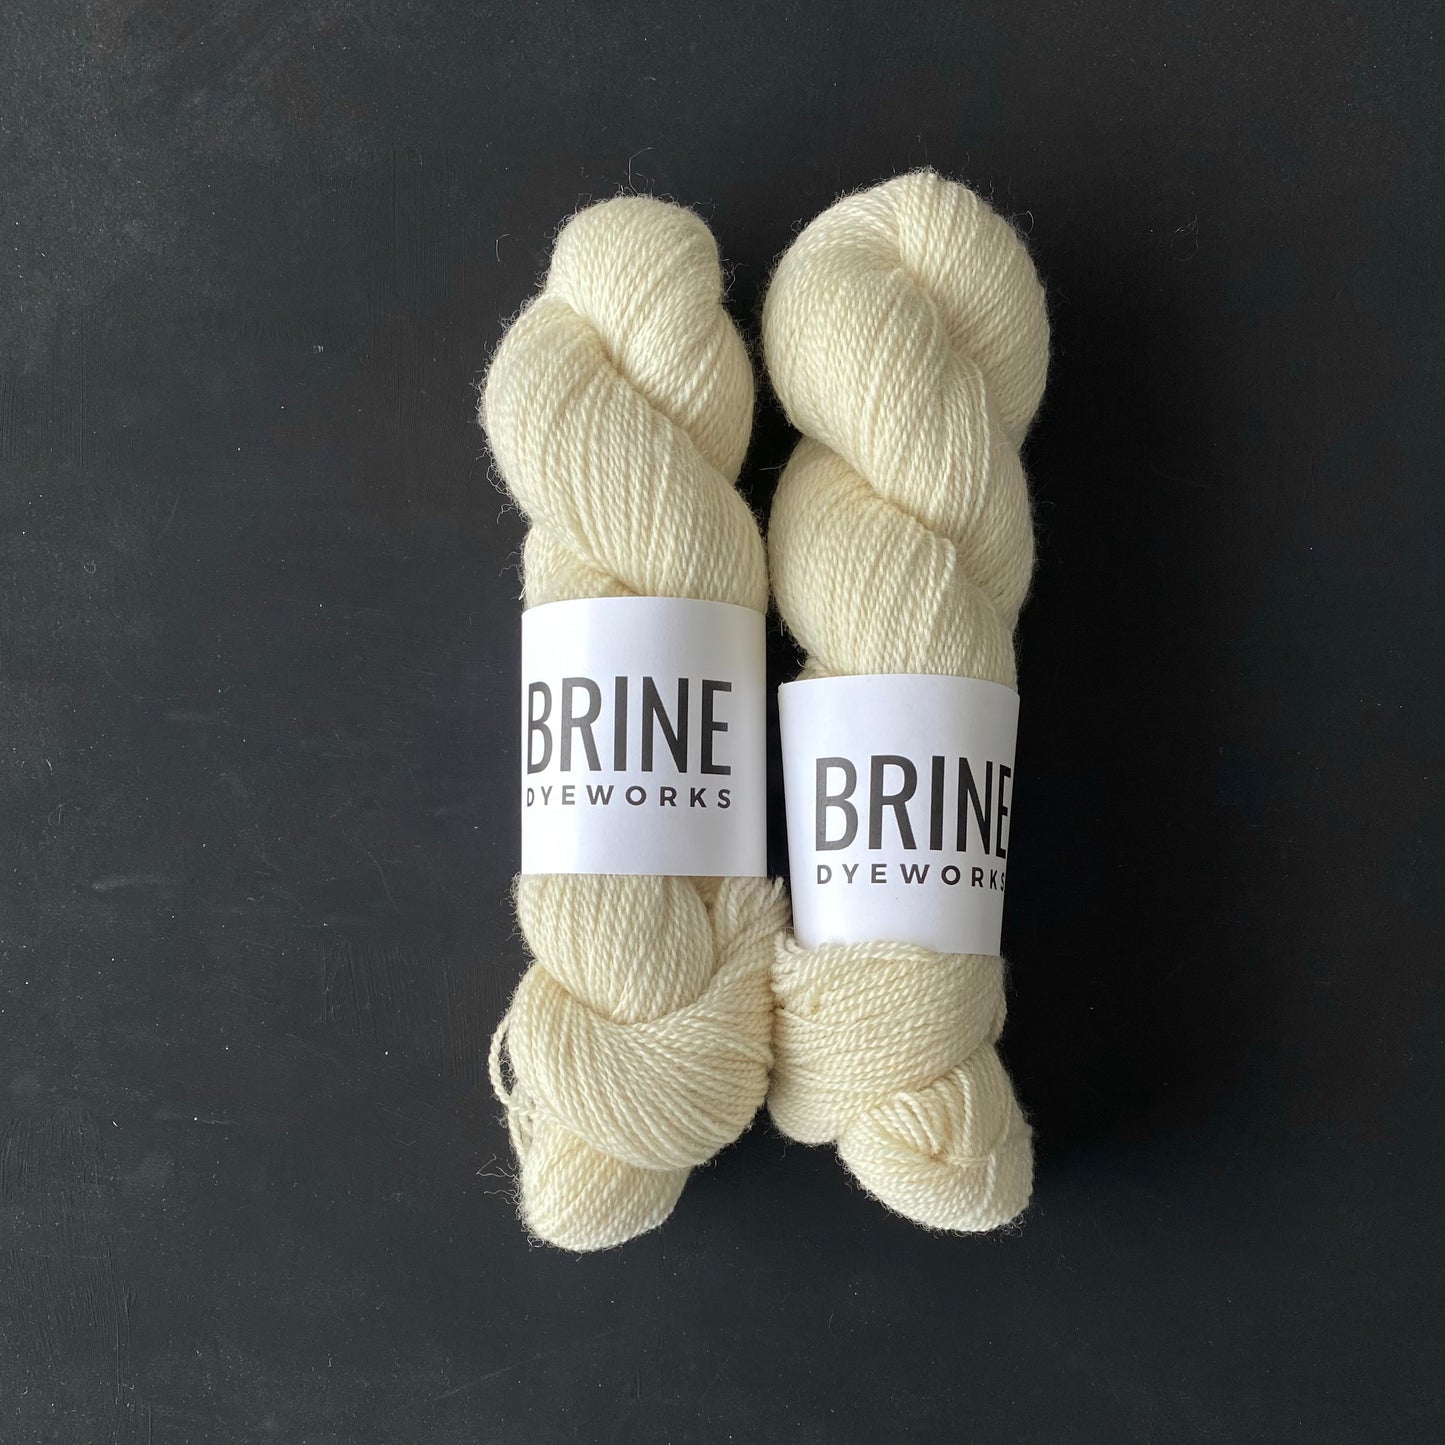 Bare (Undyed) Yarn – Brine Dyeworks